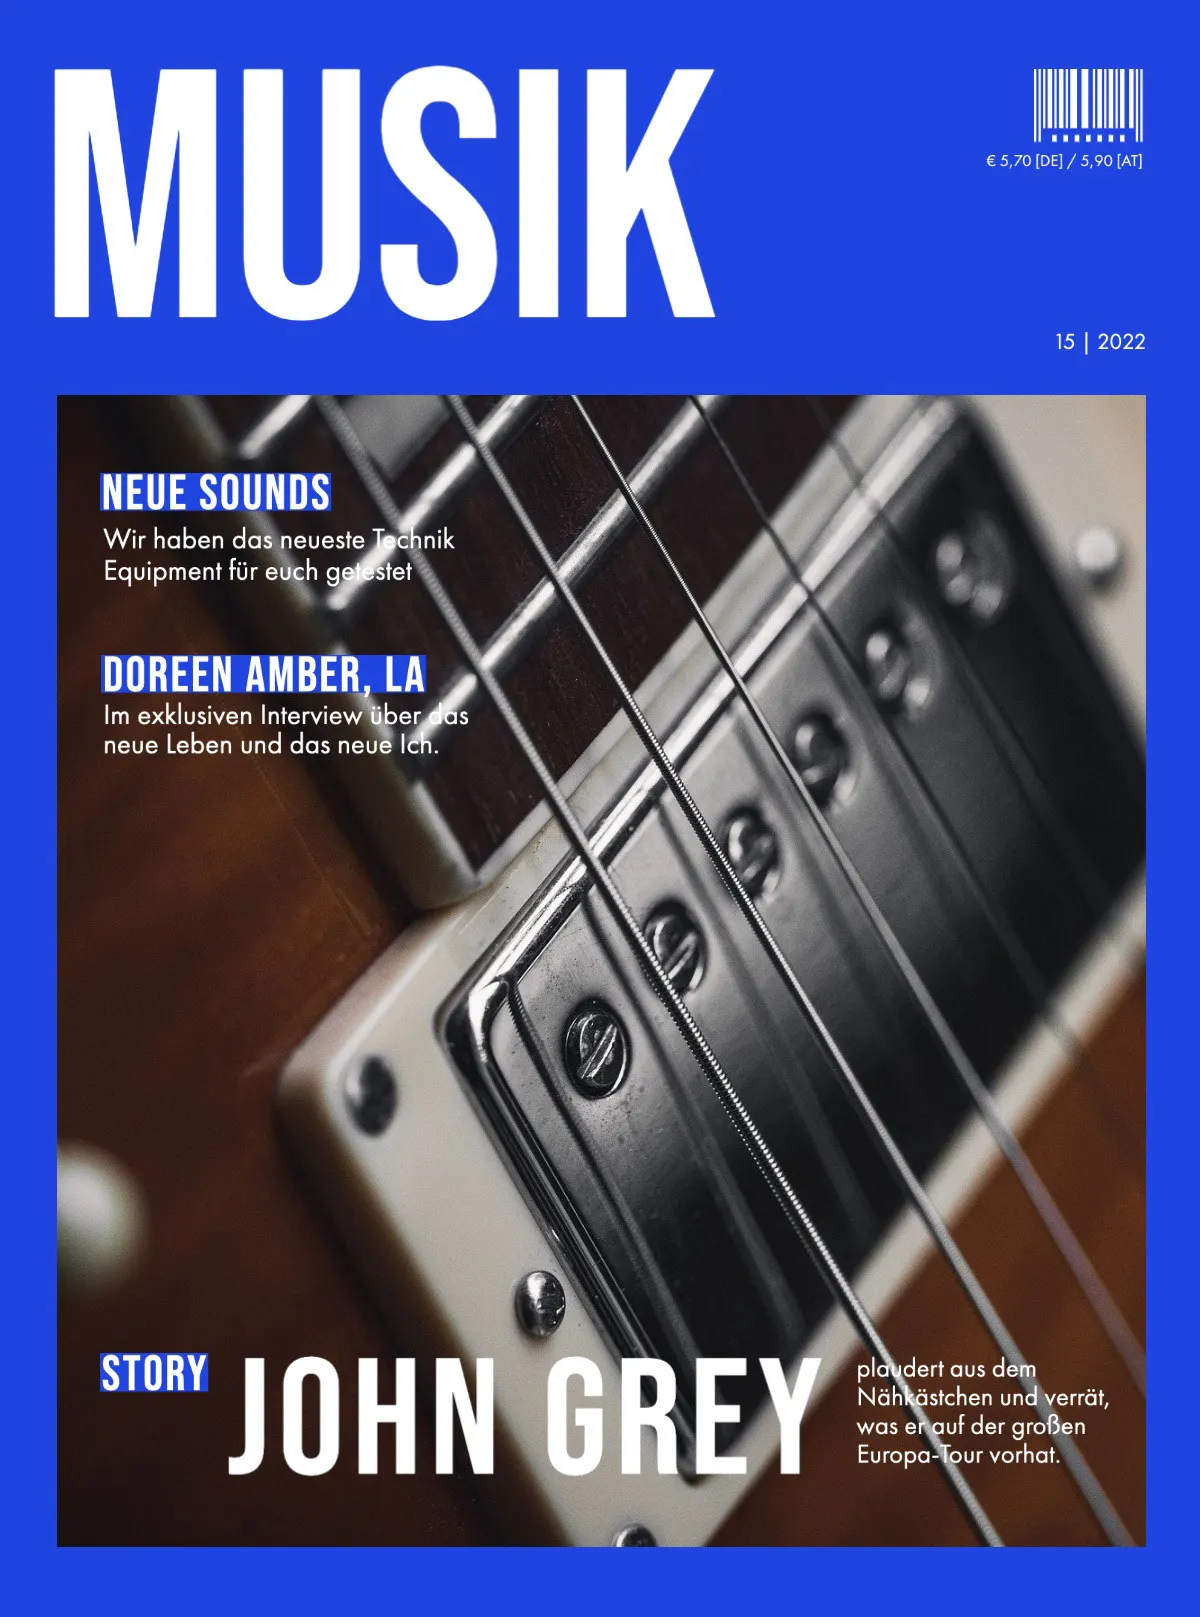 Cobalt Blue Music Magazine Cover